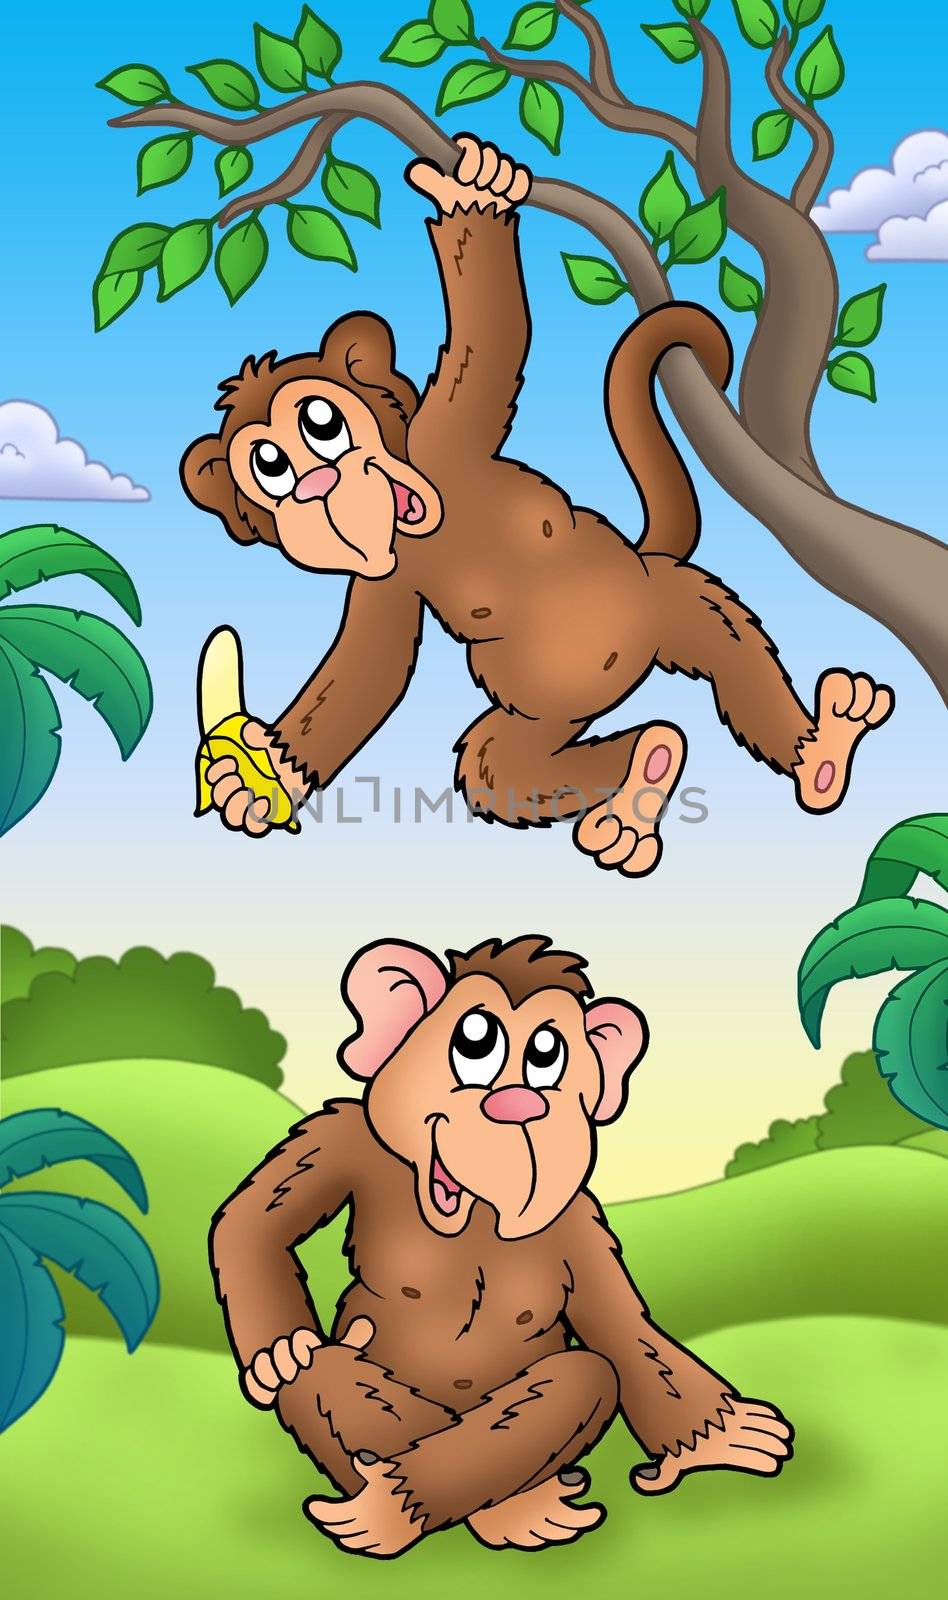 Two cartoon monkeys - color illustration.